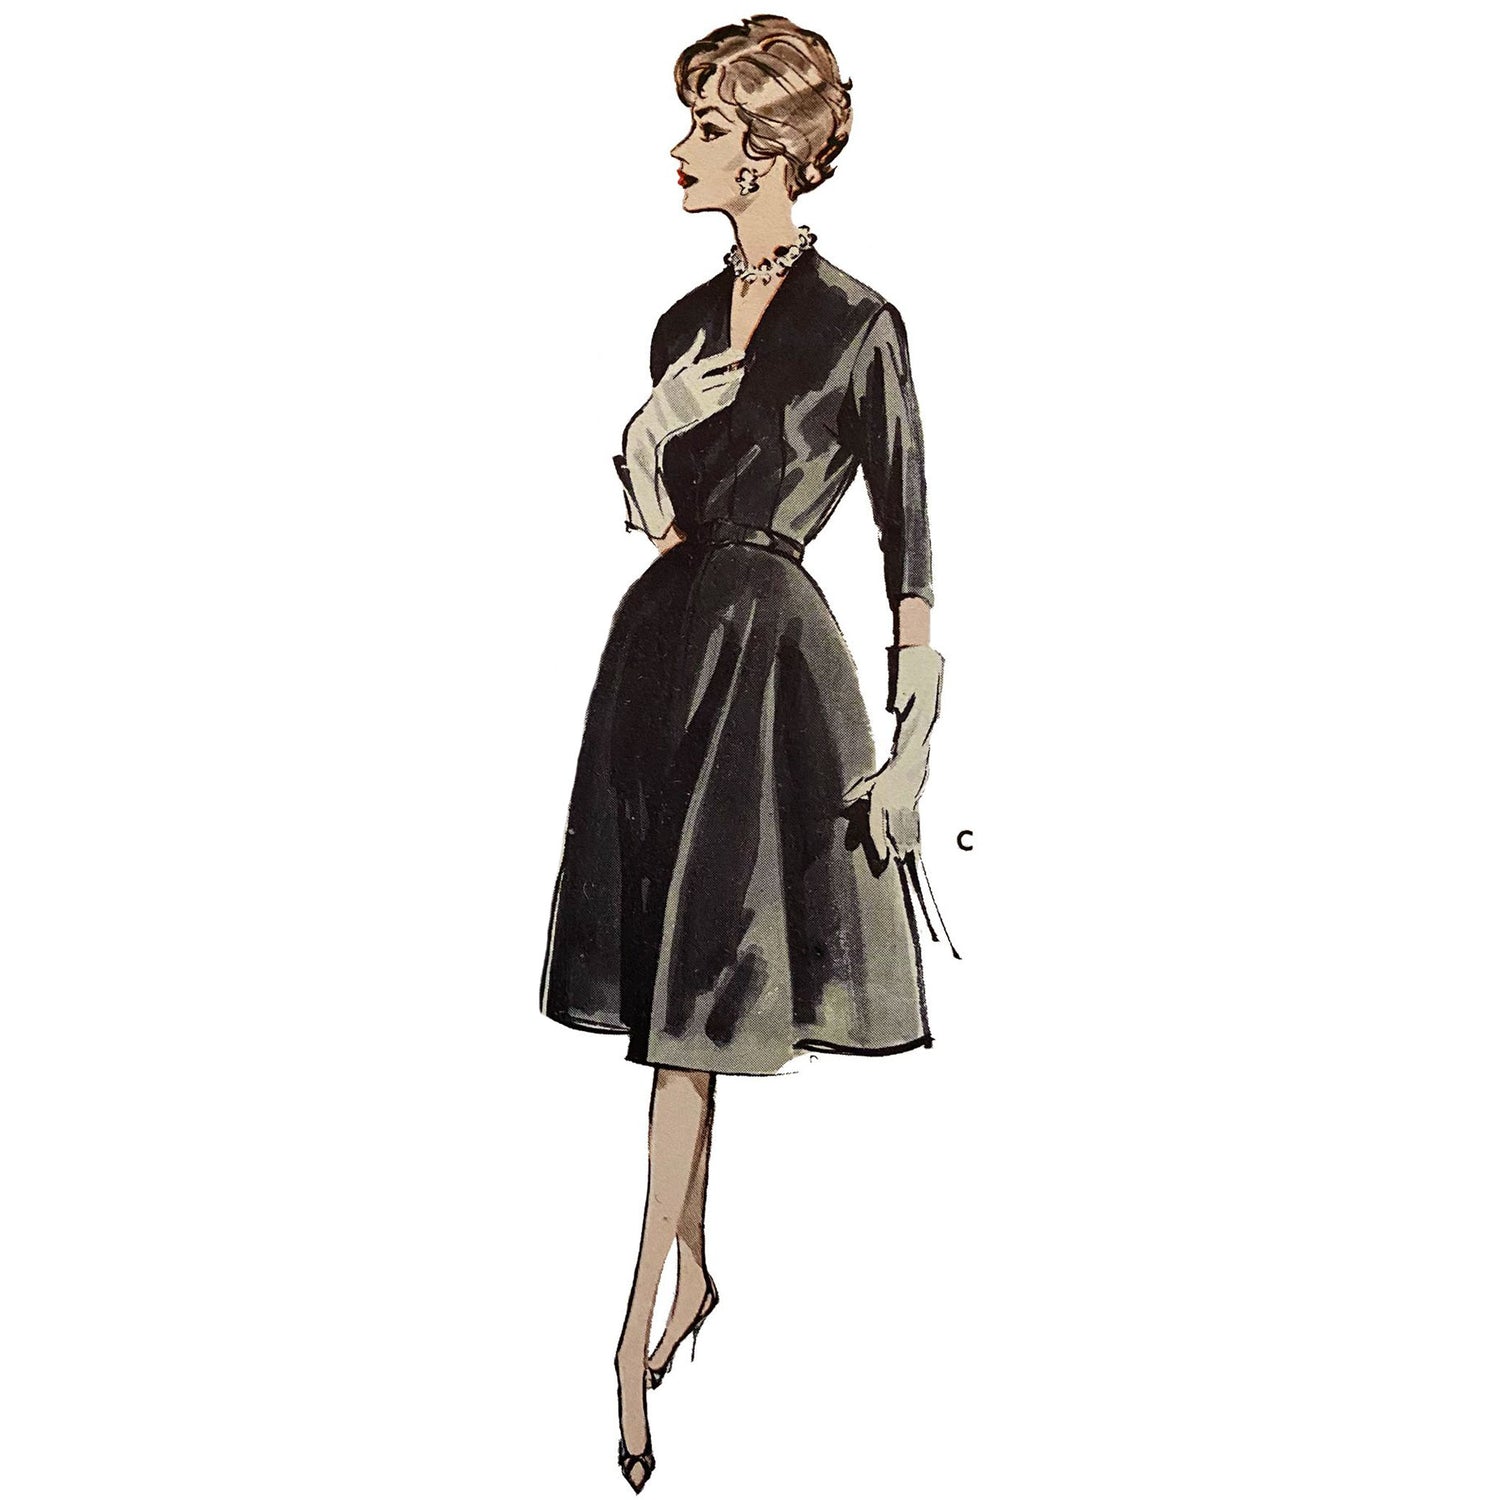 PDF-Vintage 50s Patter –Sarong Dress, beachwear- Bust 36”-Download – Vintage  Sewing Pattern Company